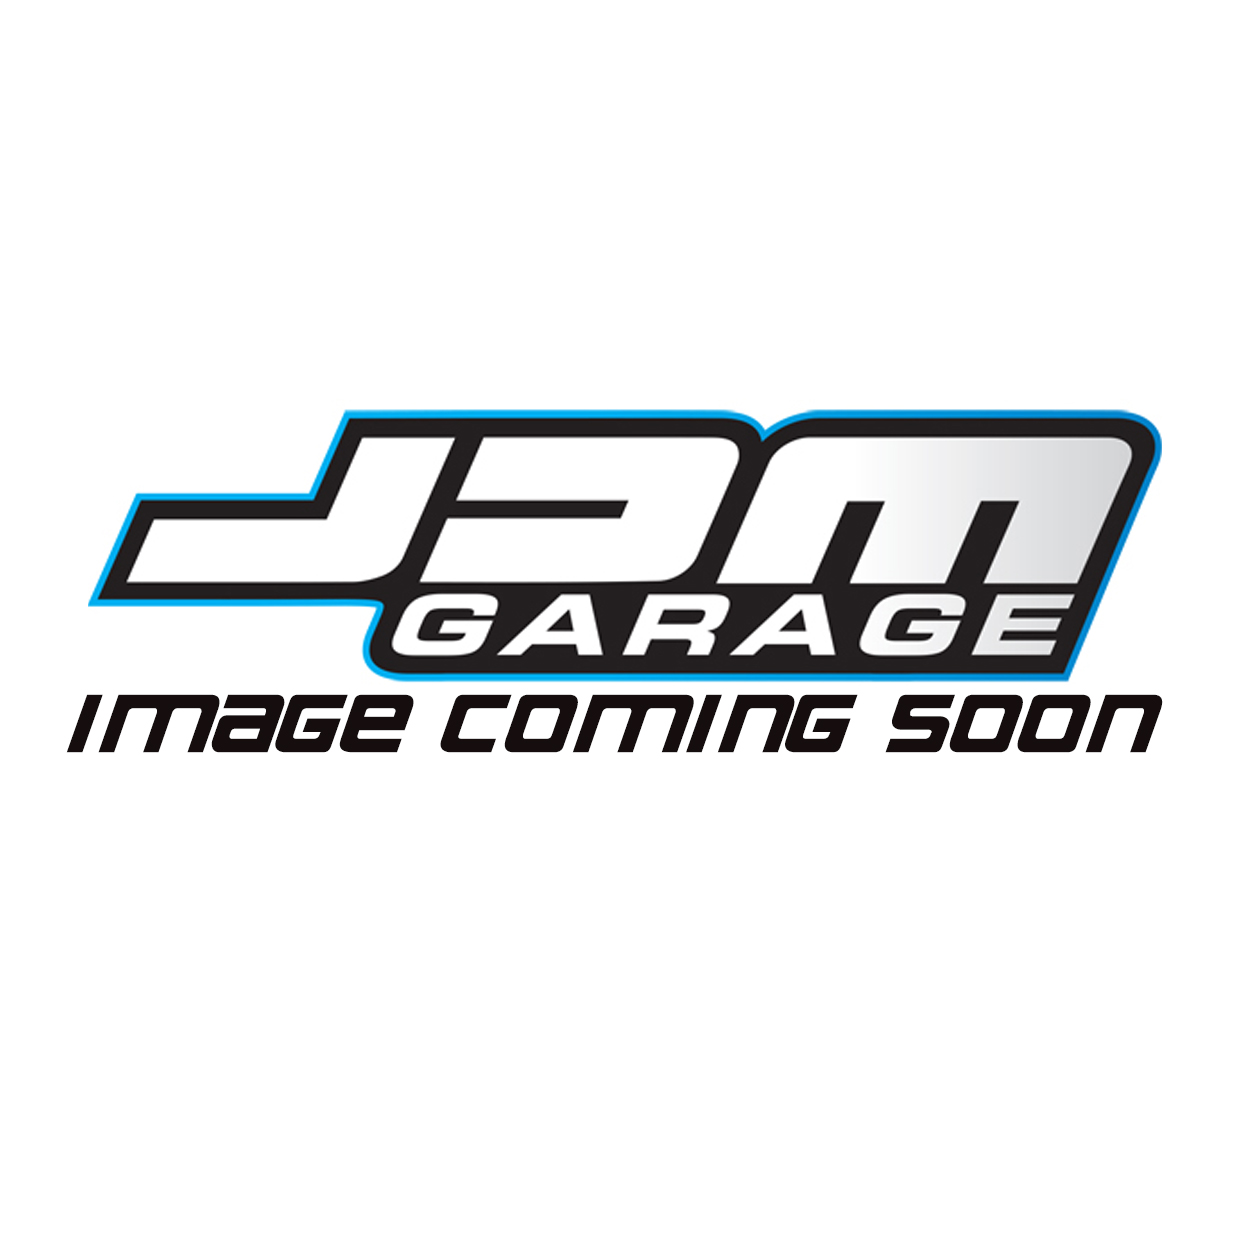 JDM Garage SR20DET VVT Turbo Kit - Fits Nissan Silvia S14 S15 